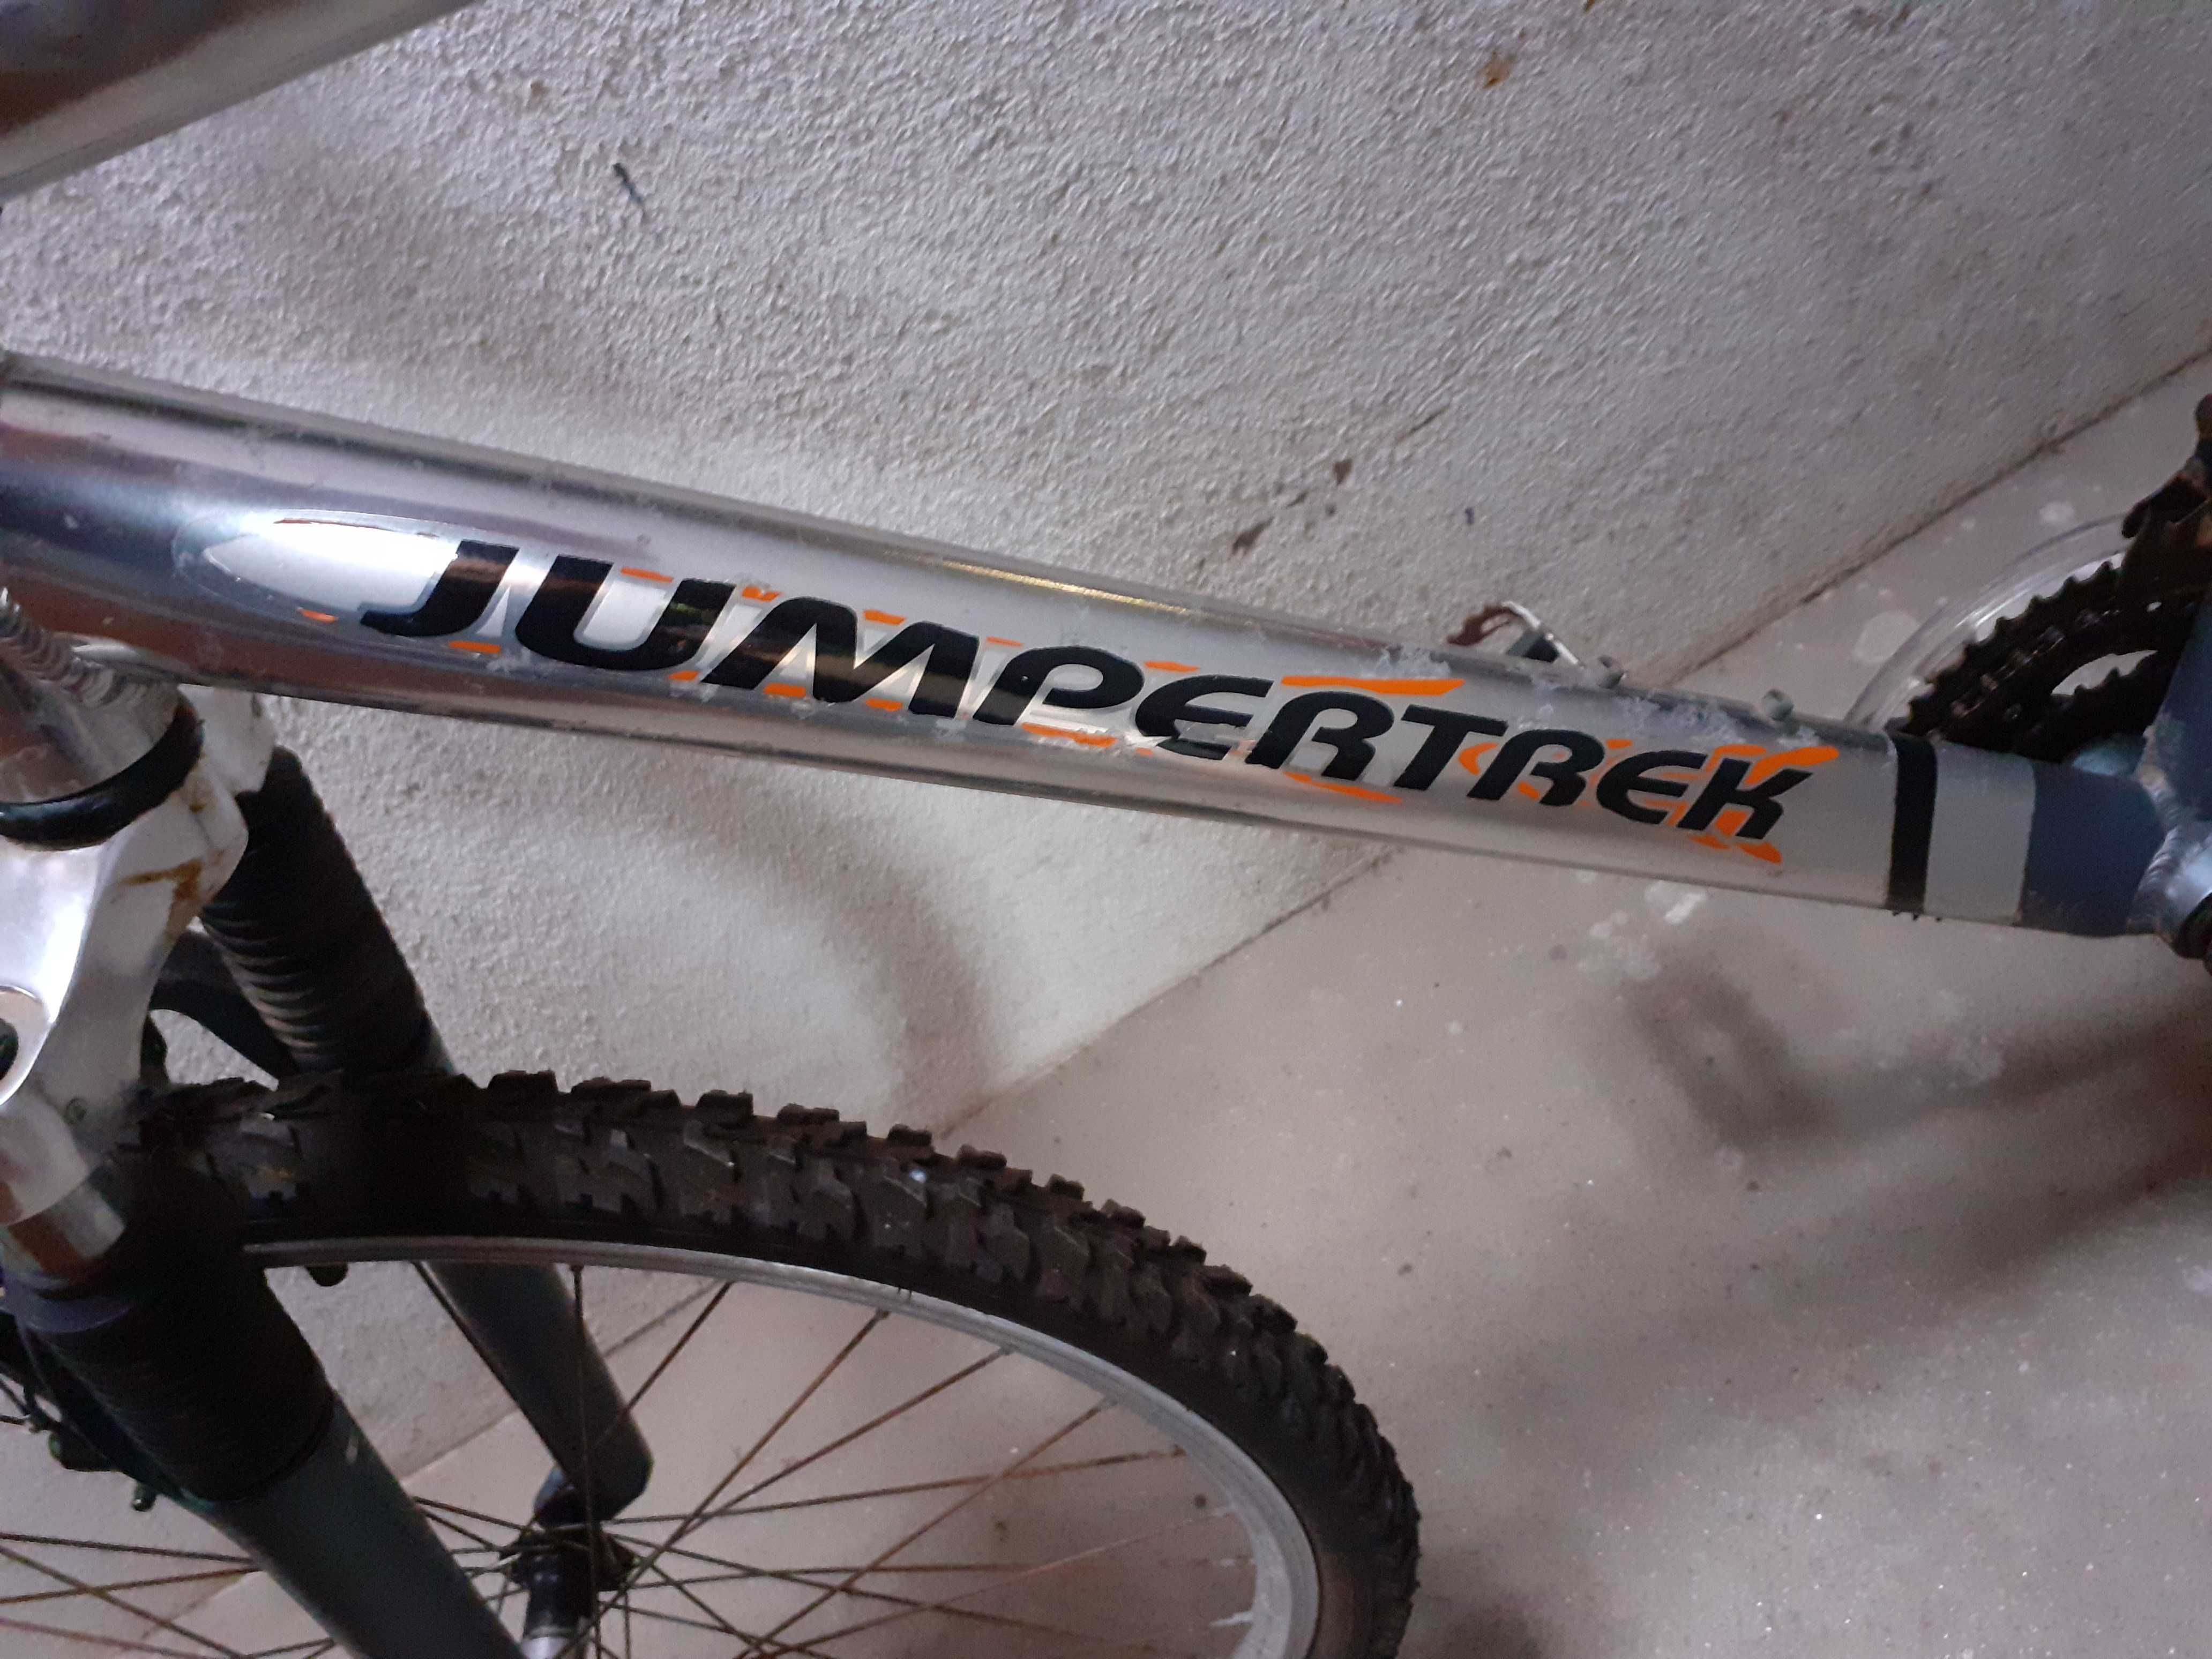 Bicicleta usada da marca JUMPERTREK